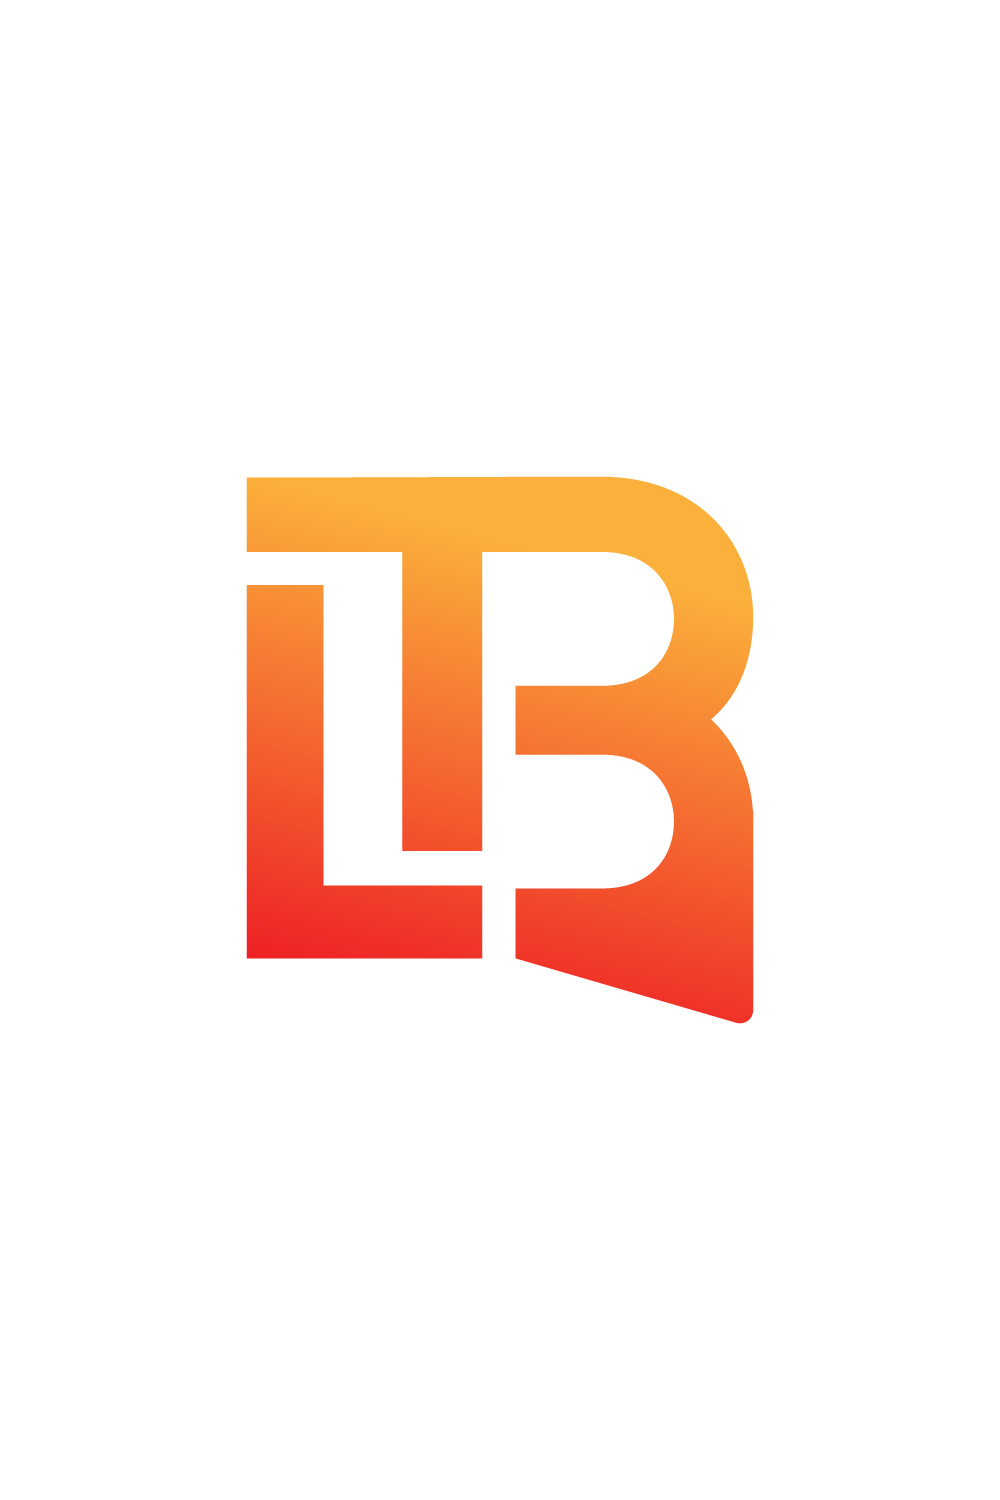 LTB App Logo pinterest preview image.